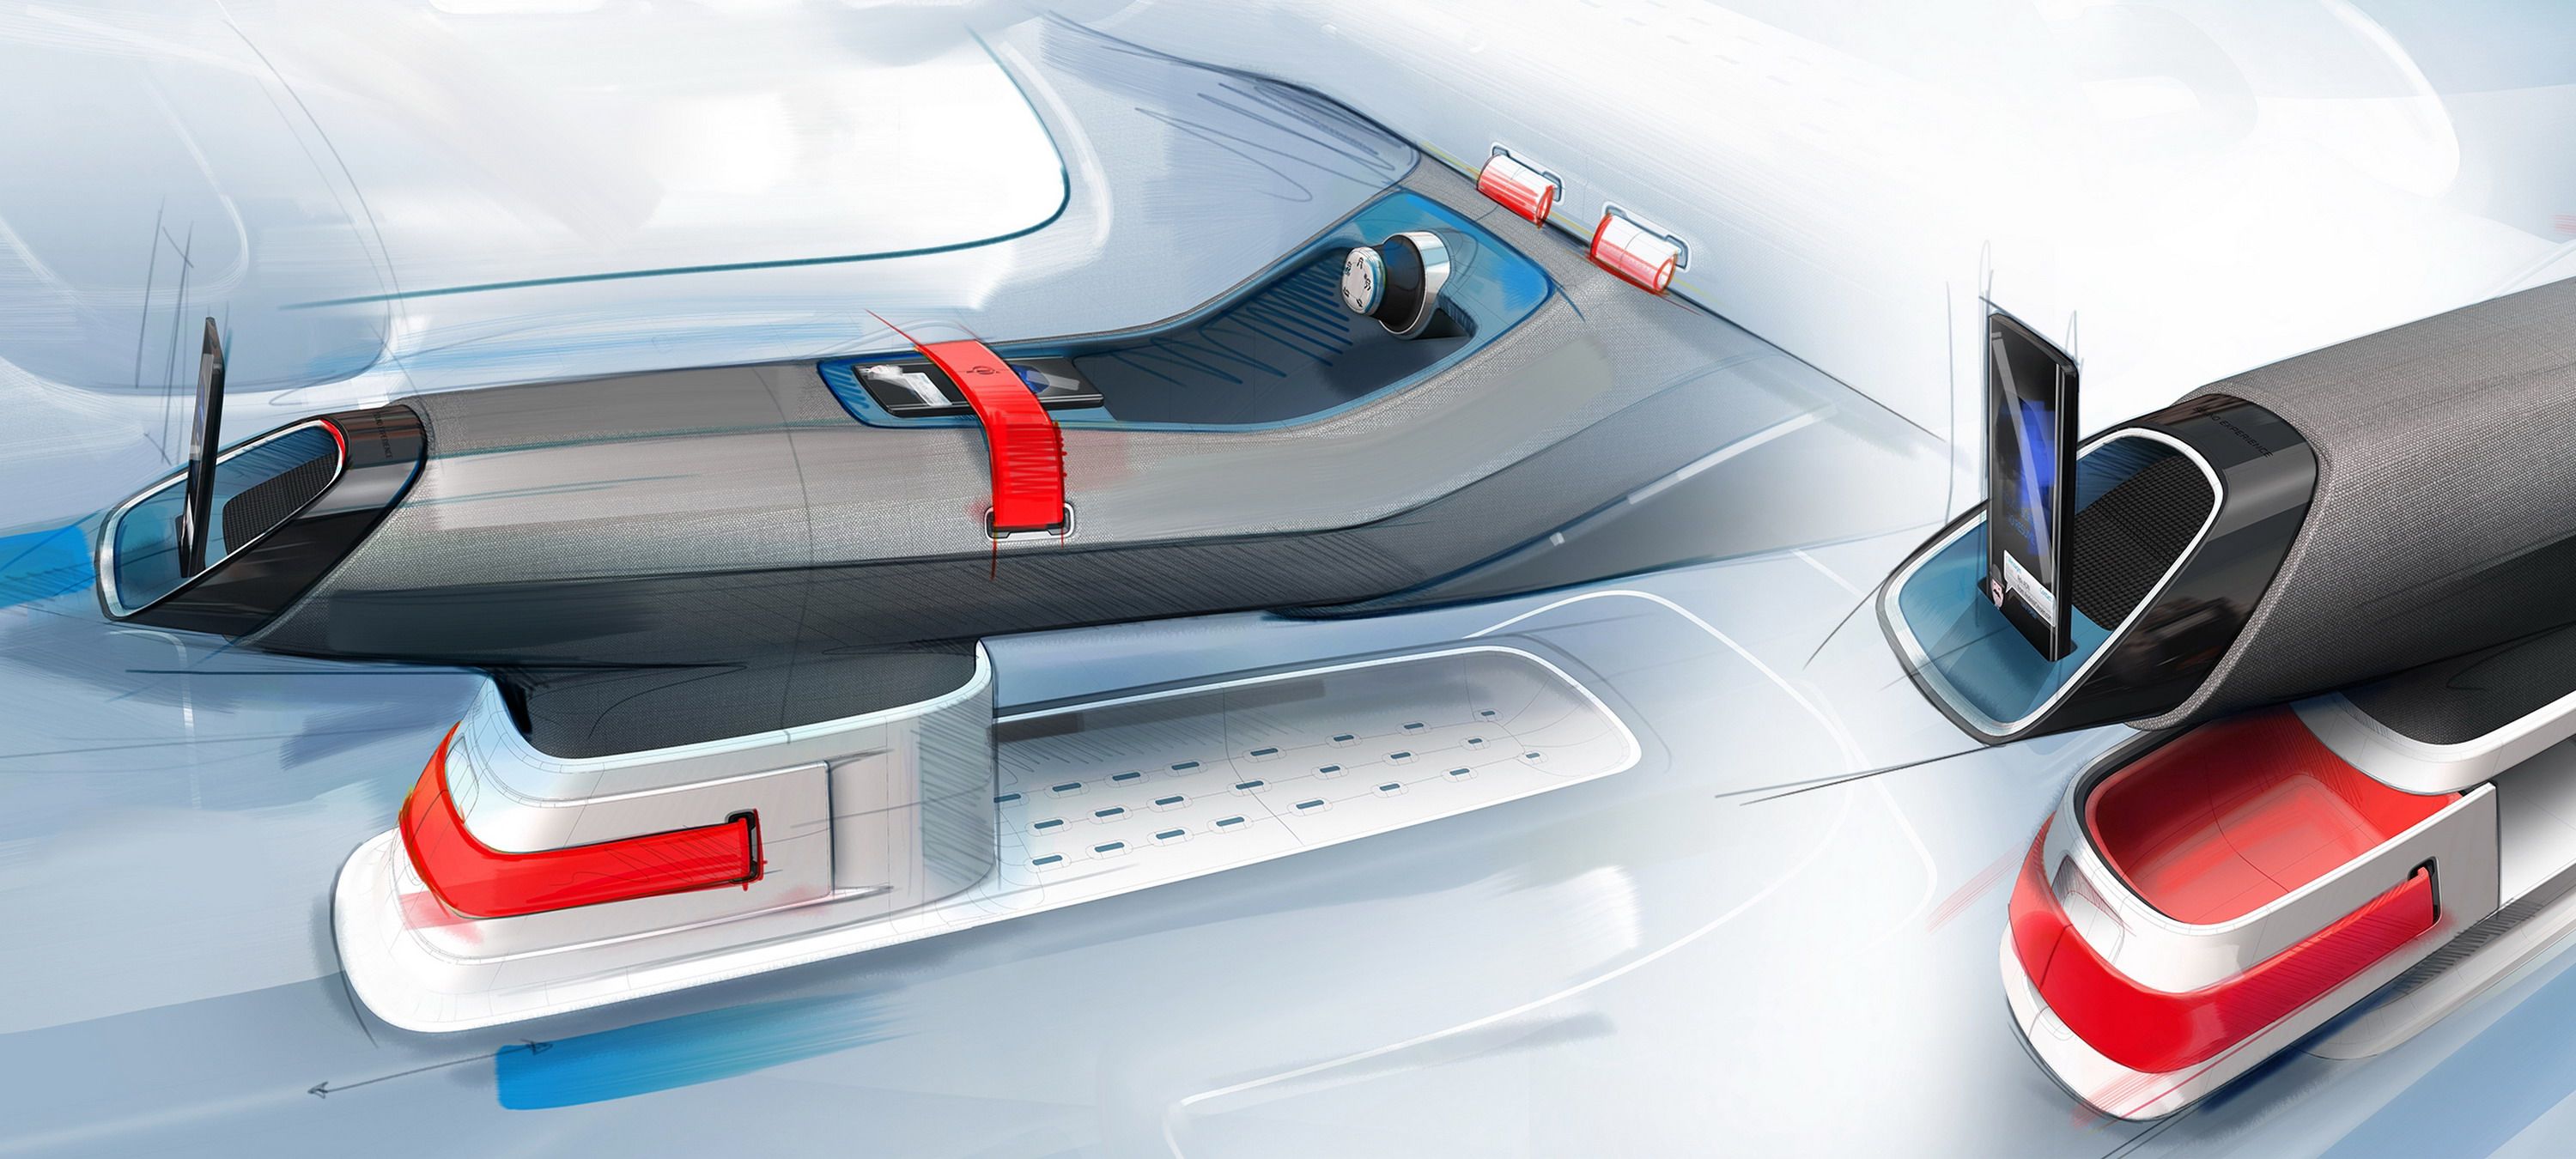 2017 Citroen C-Aircross Concept